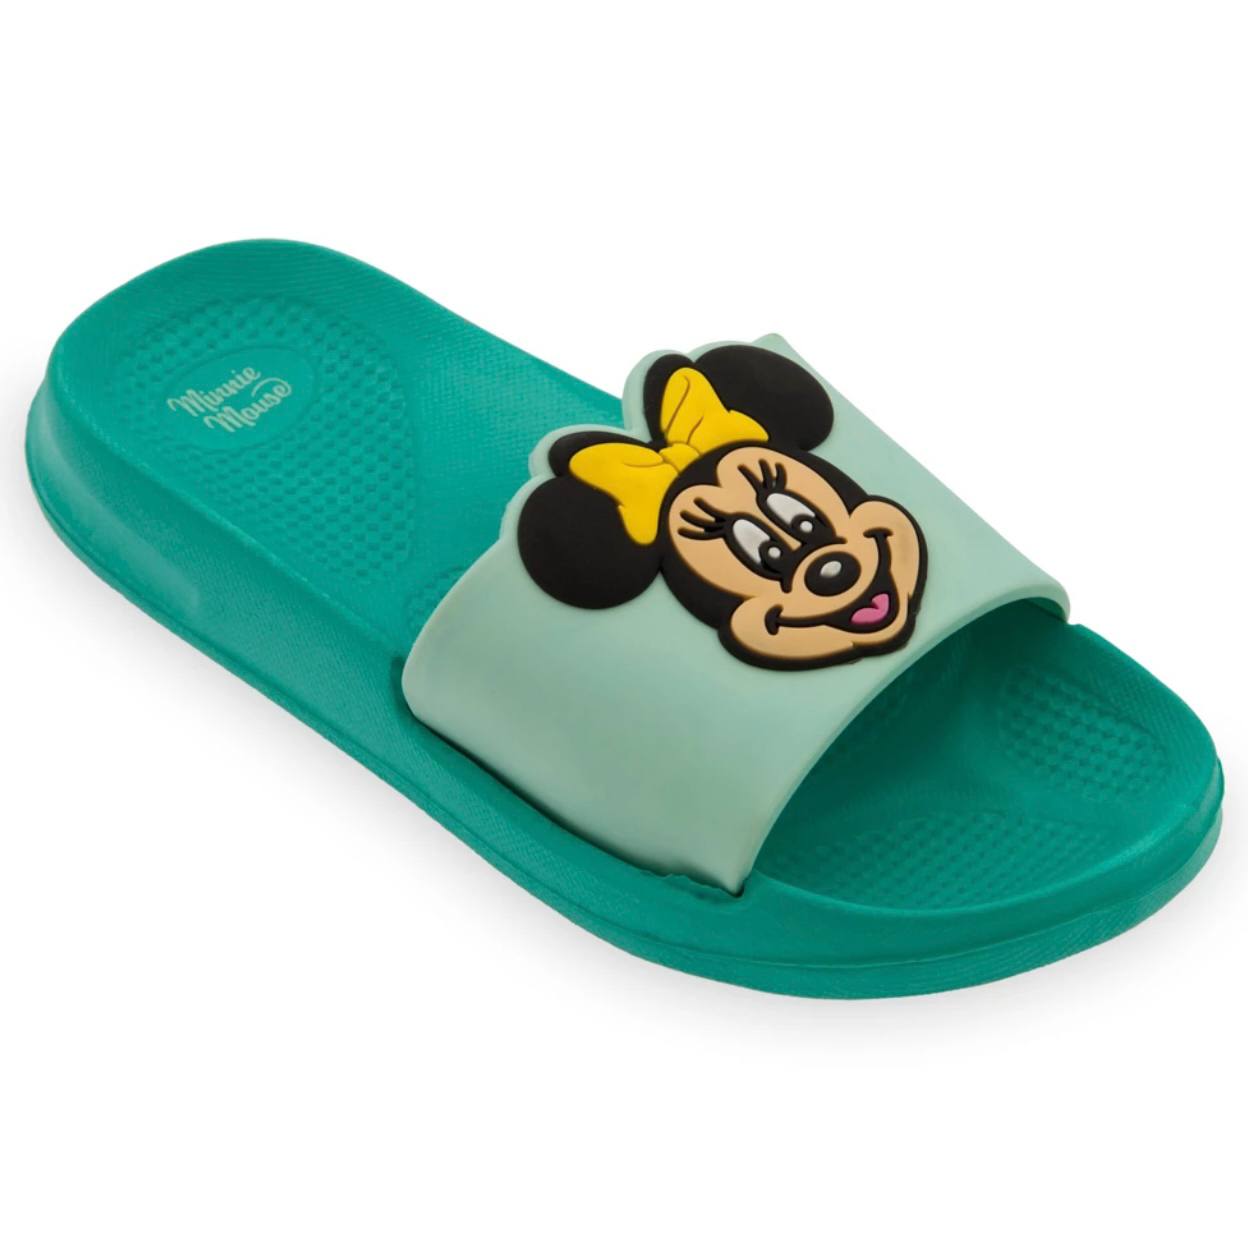 Disney Minnie Mouse Sliders US size 2/3, EUR 32-33